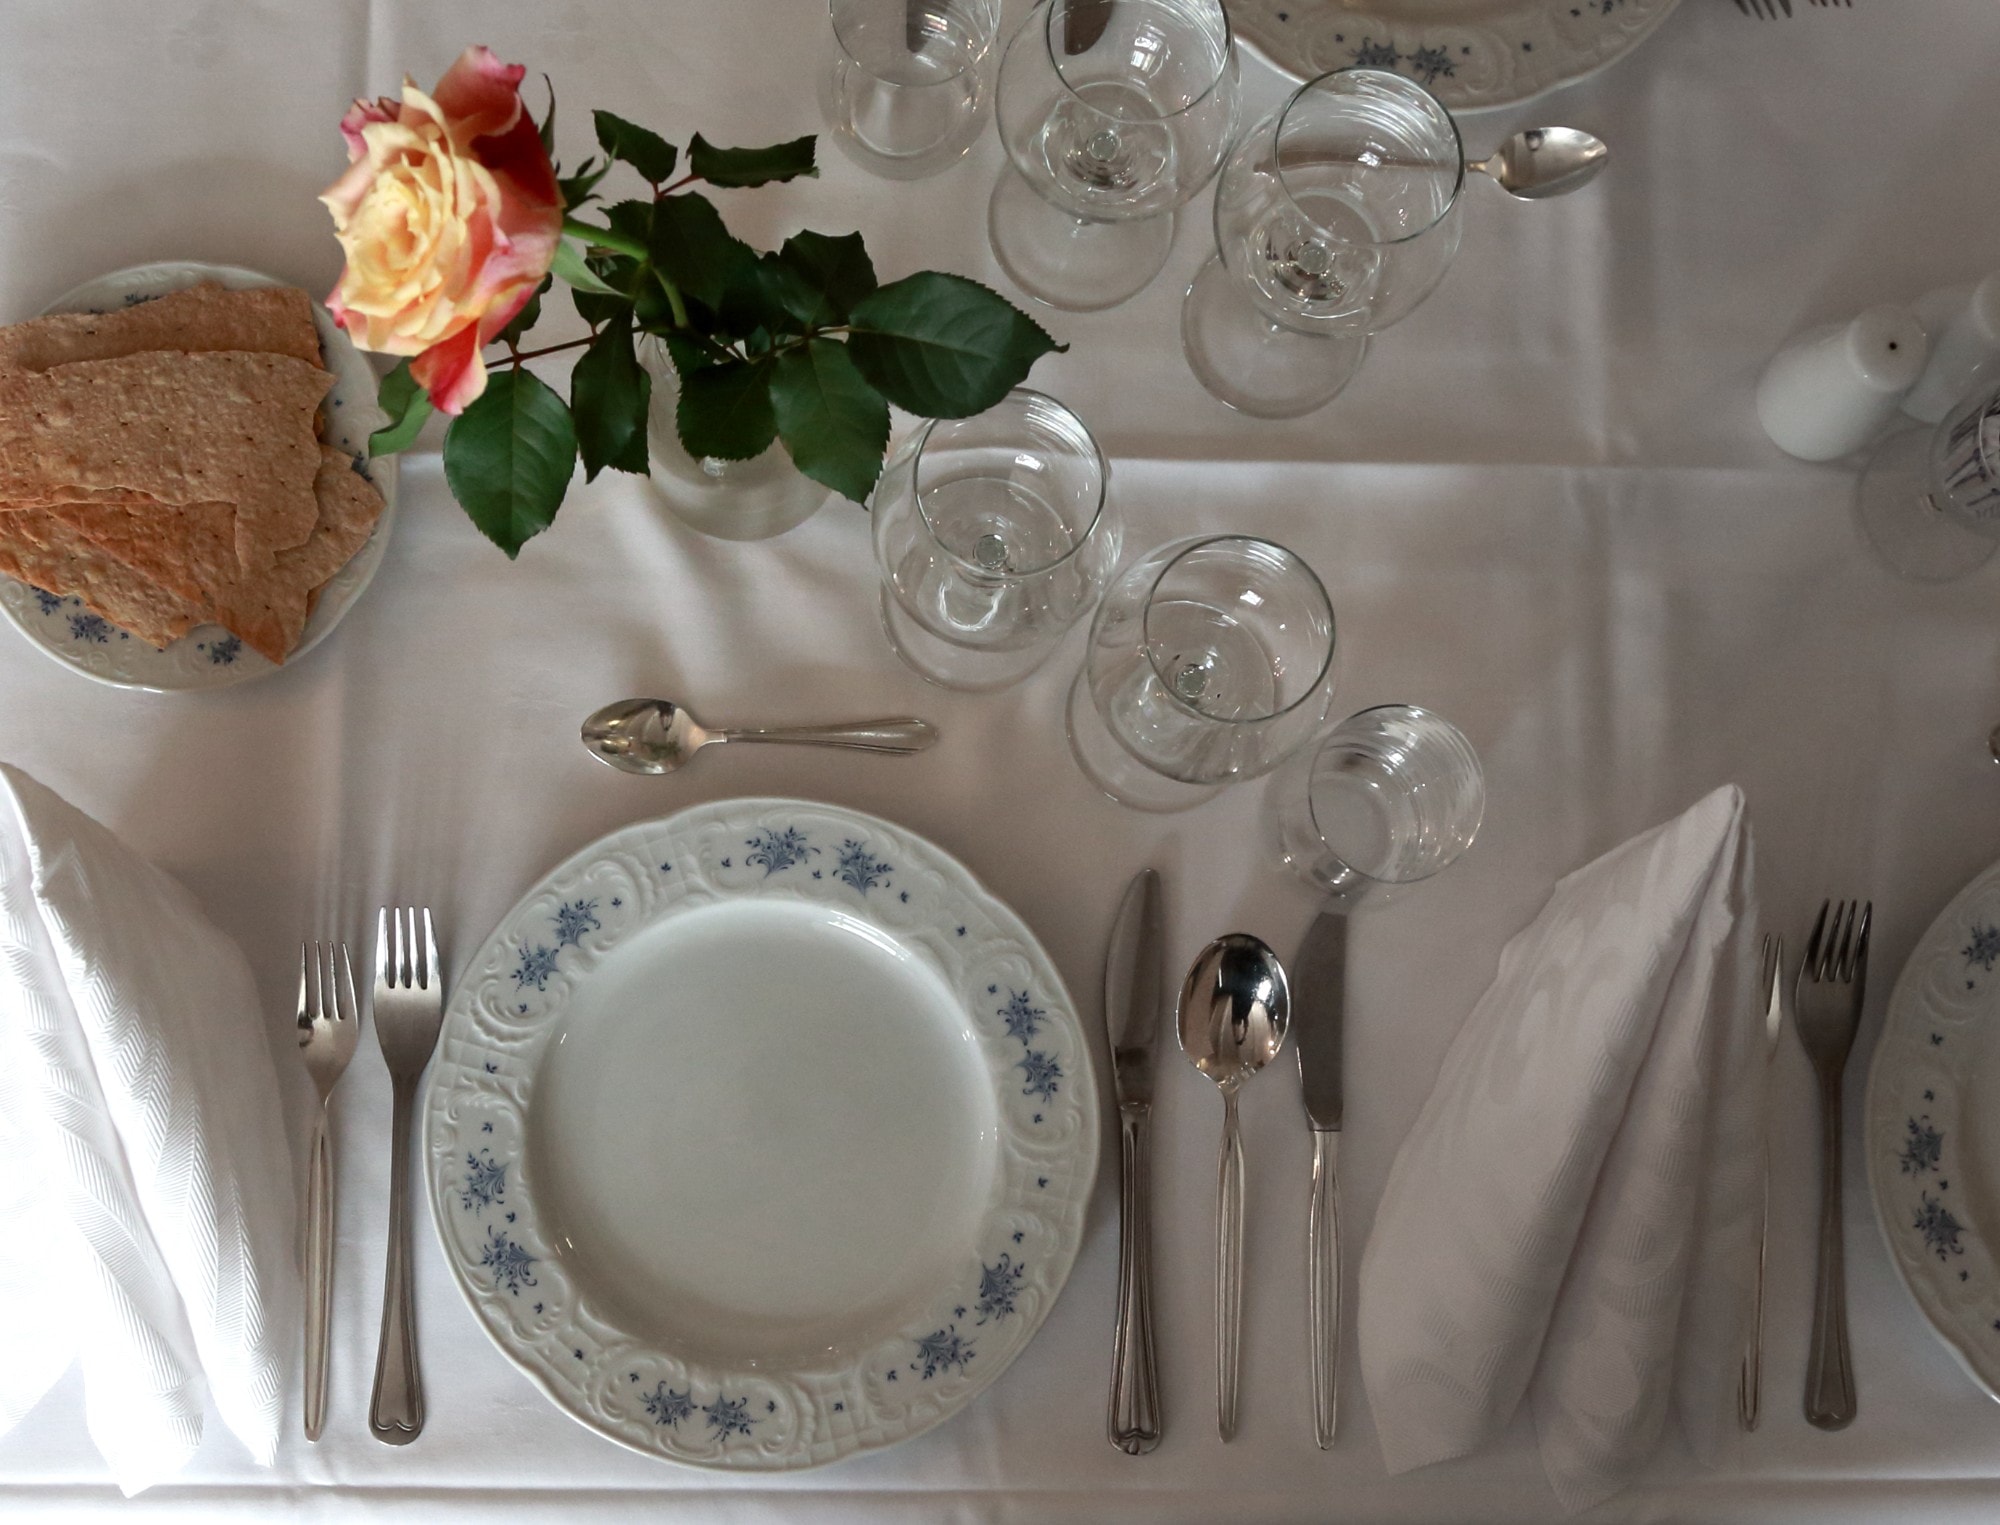 Set banquet table